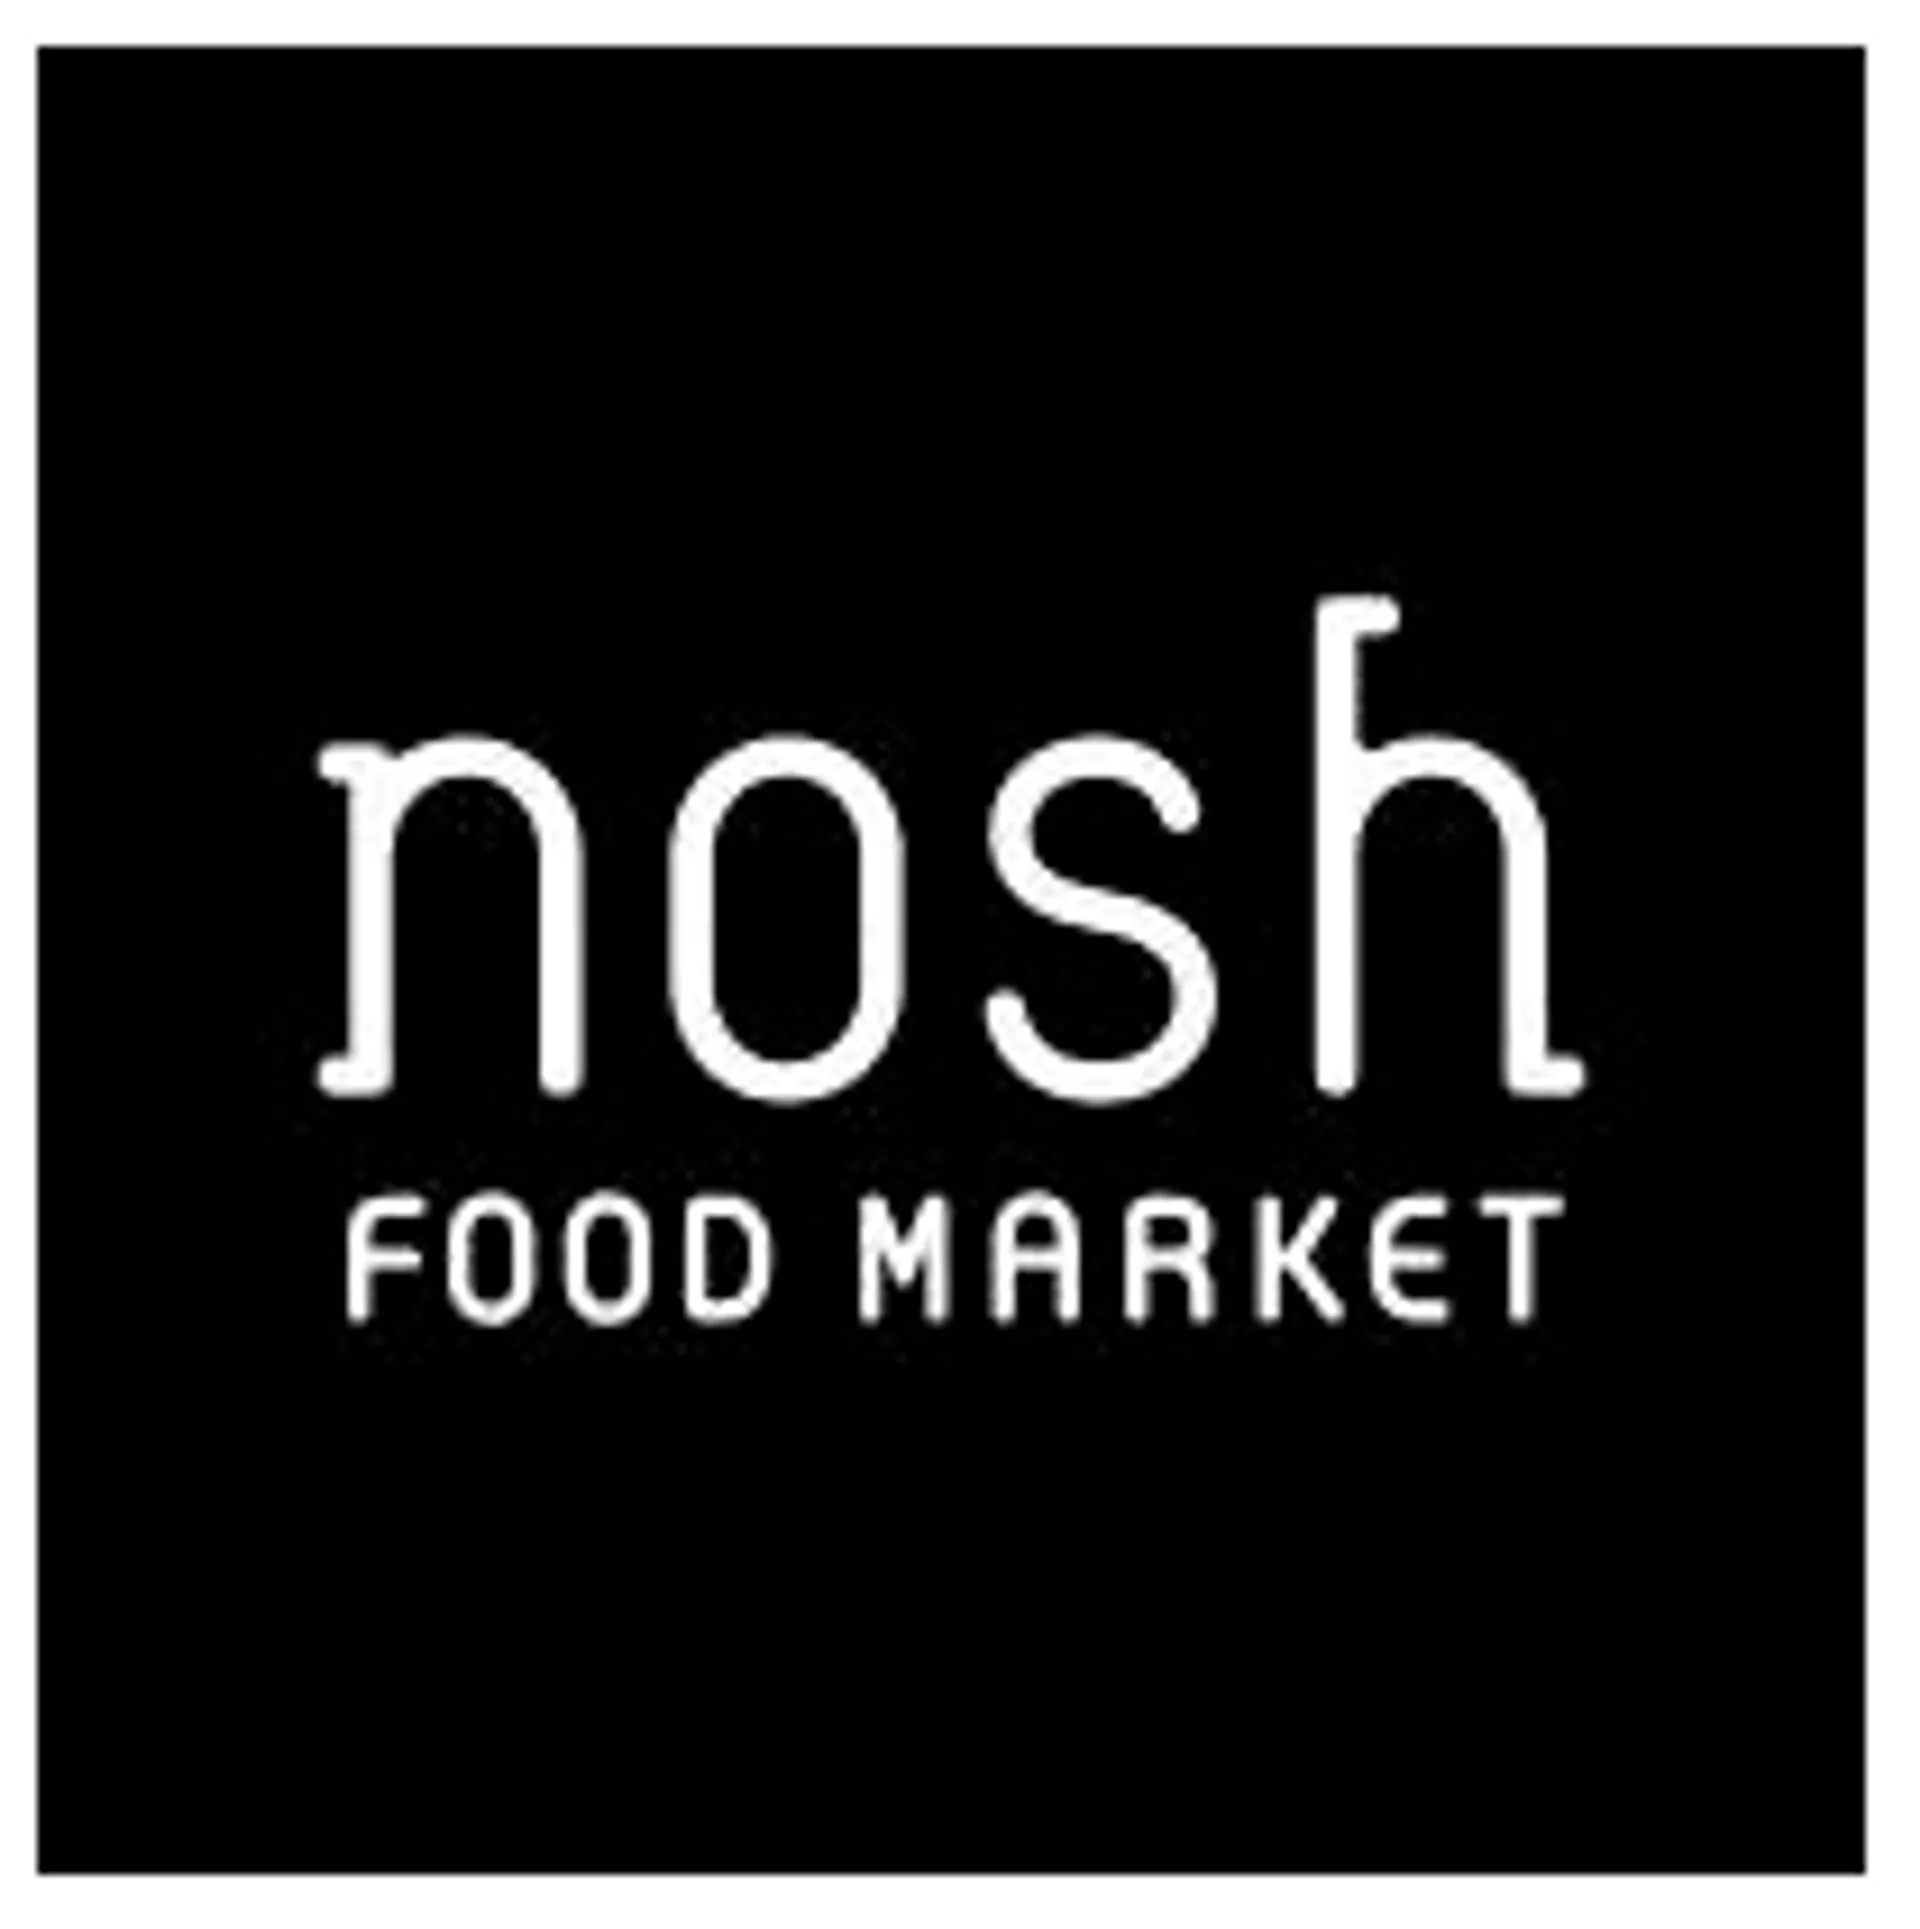 NOSH FOOD MARKET logo. Current weekly ad